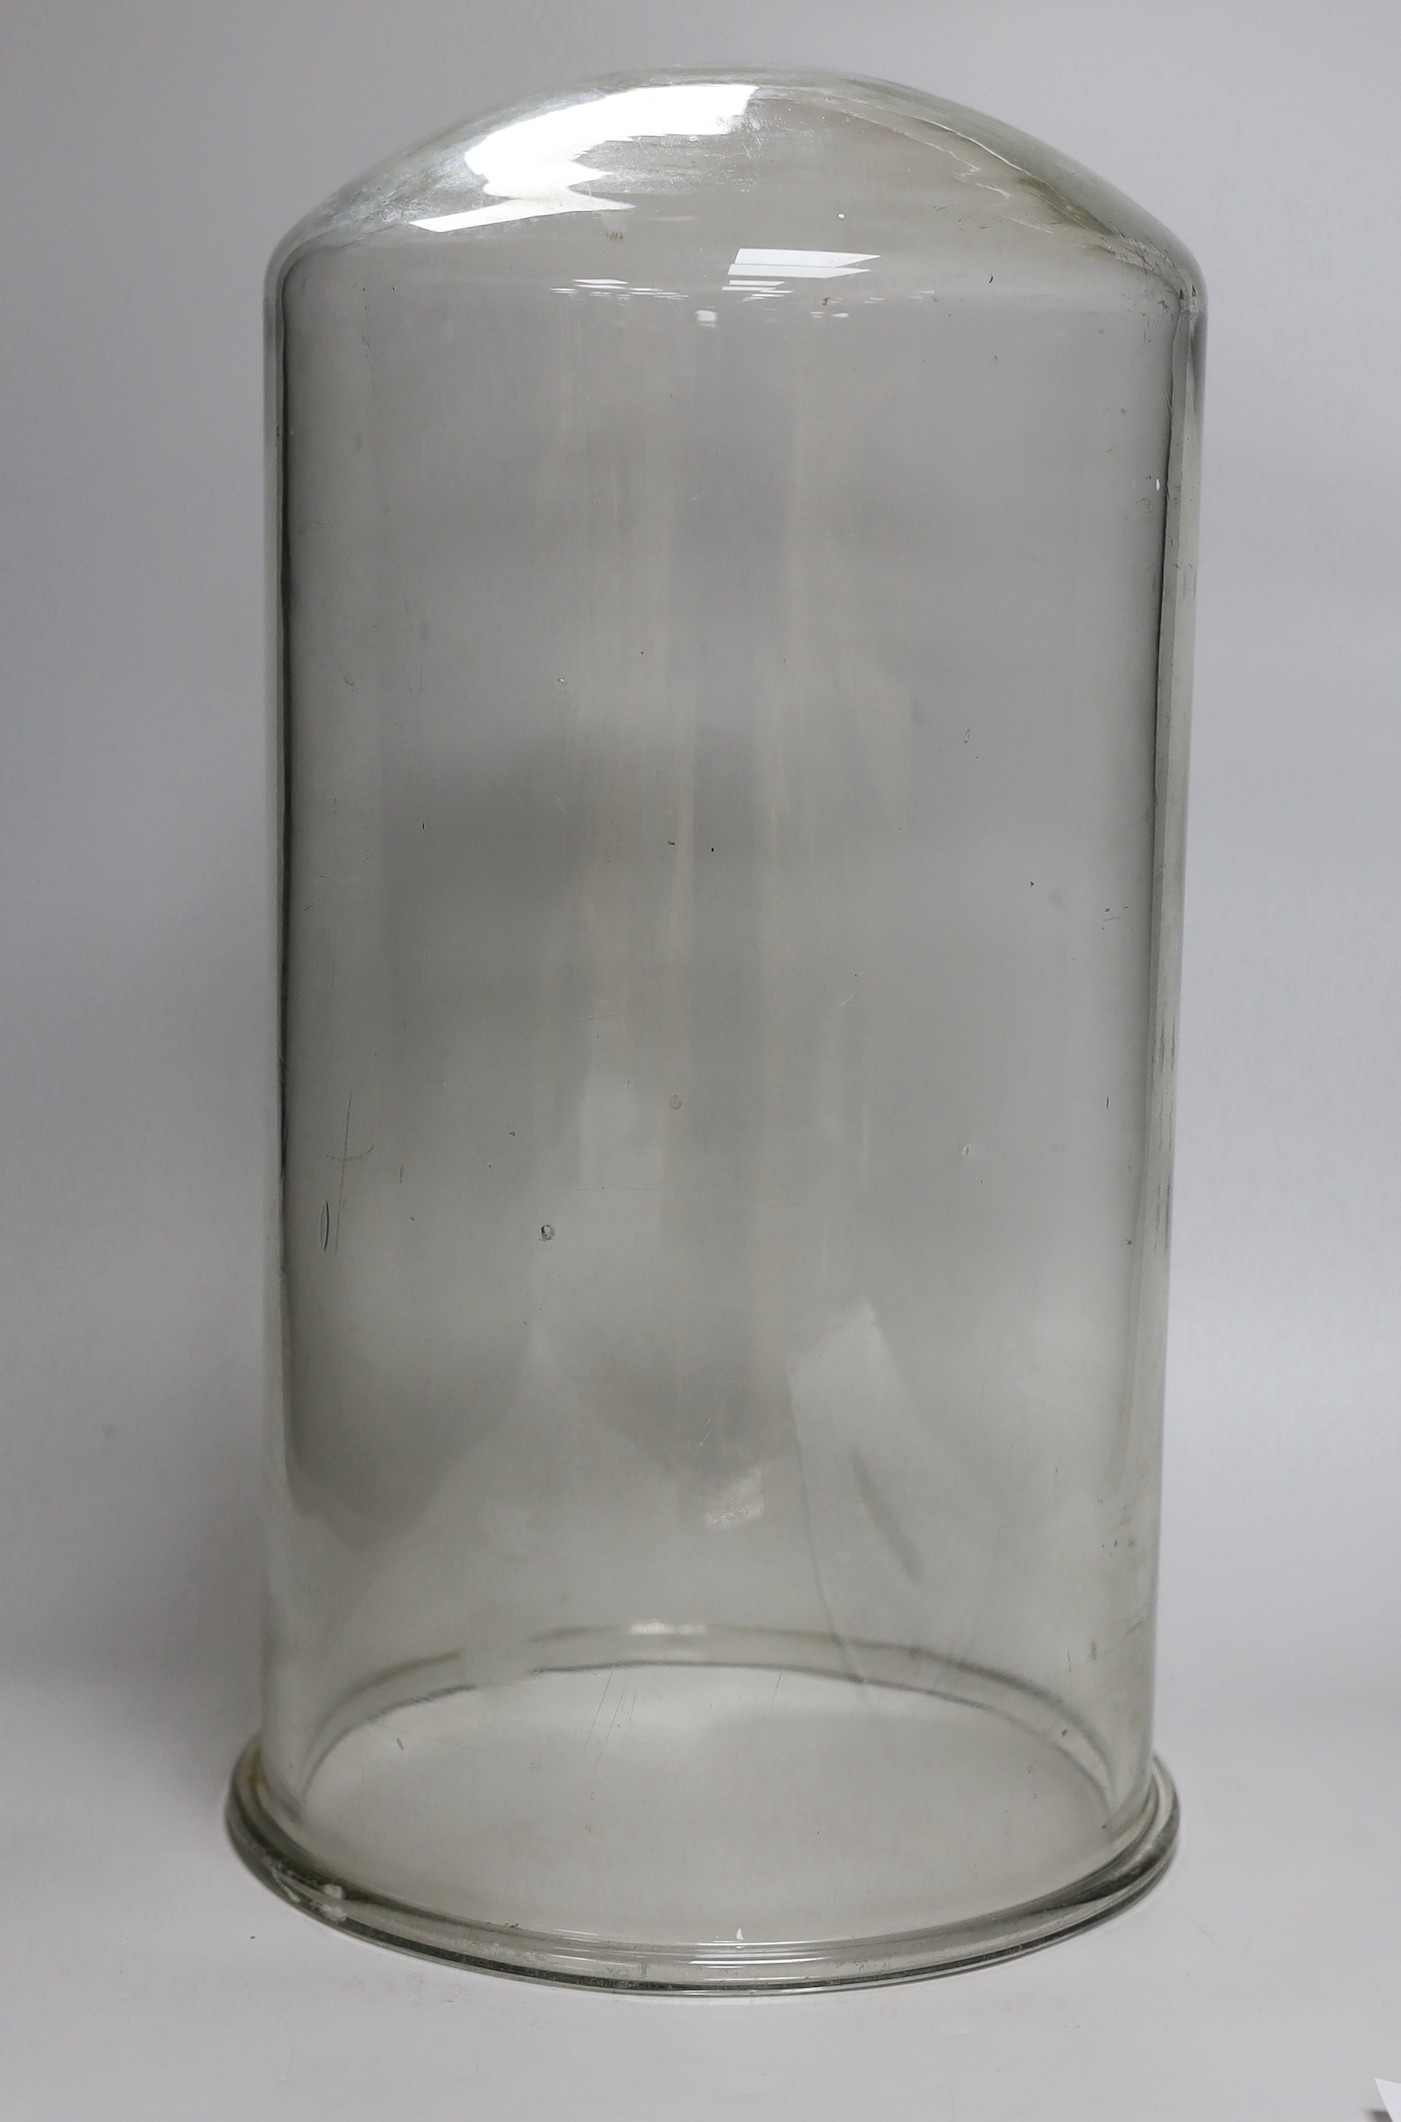 A glass display dome / bell jar. 45cm high